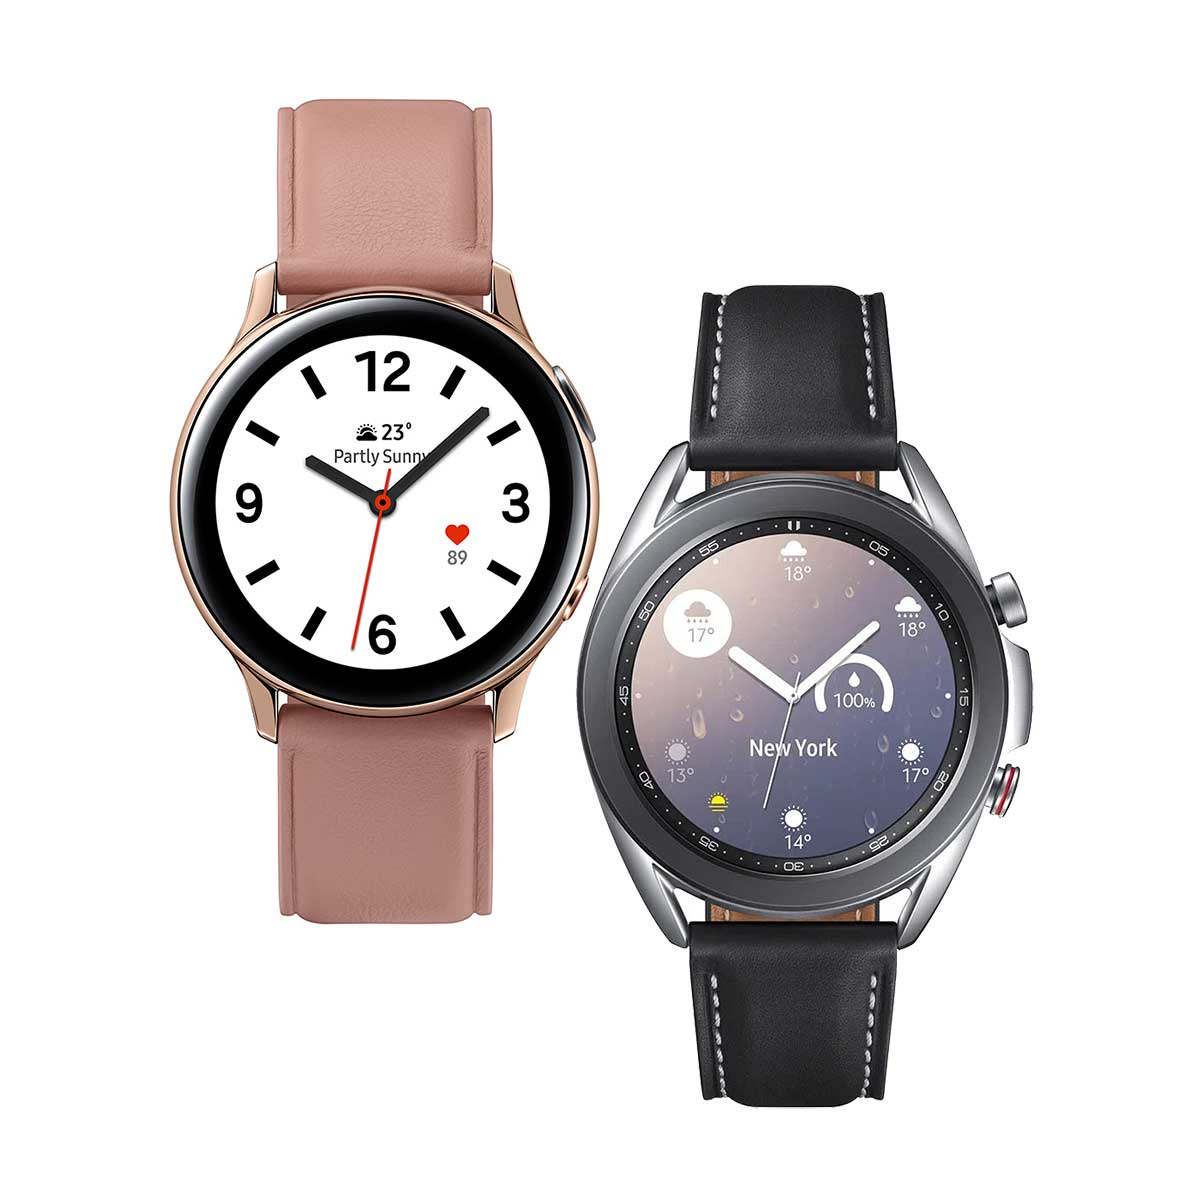 kit-smartwatch-samsung-2-pecas--galaxy-watch3-41mm-lte-prata---galaxy-active2-40mm-rose-1.jpg